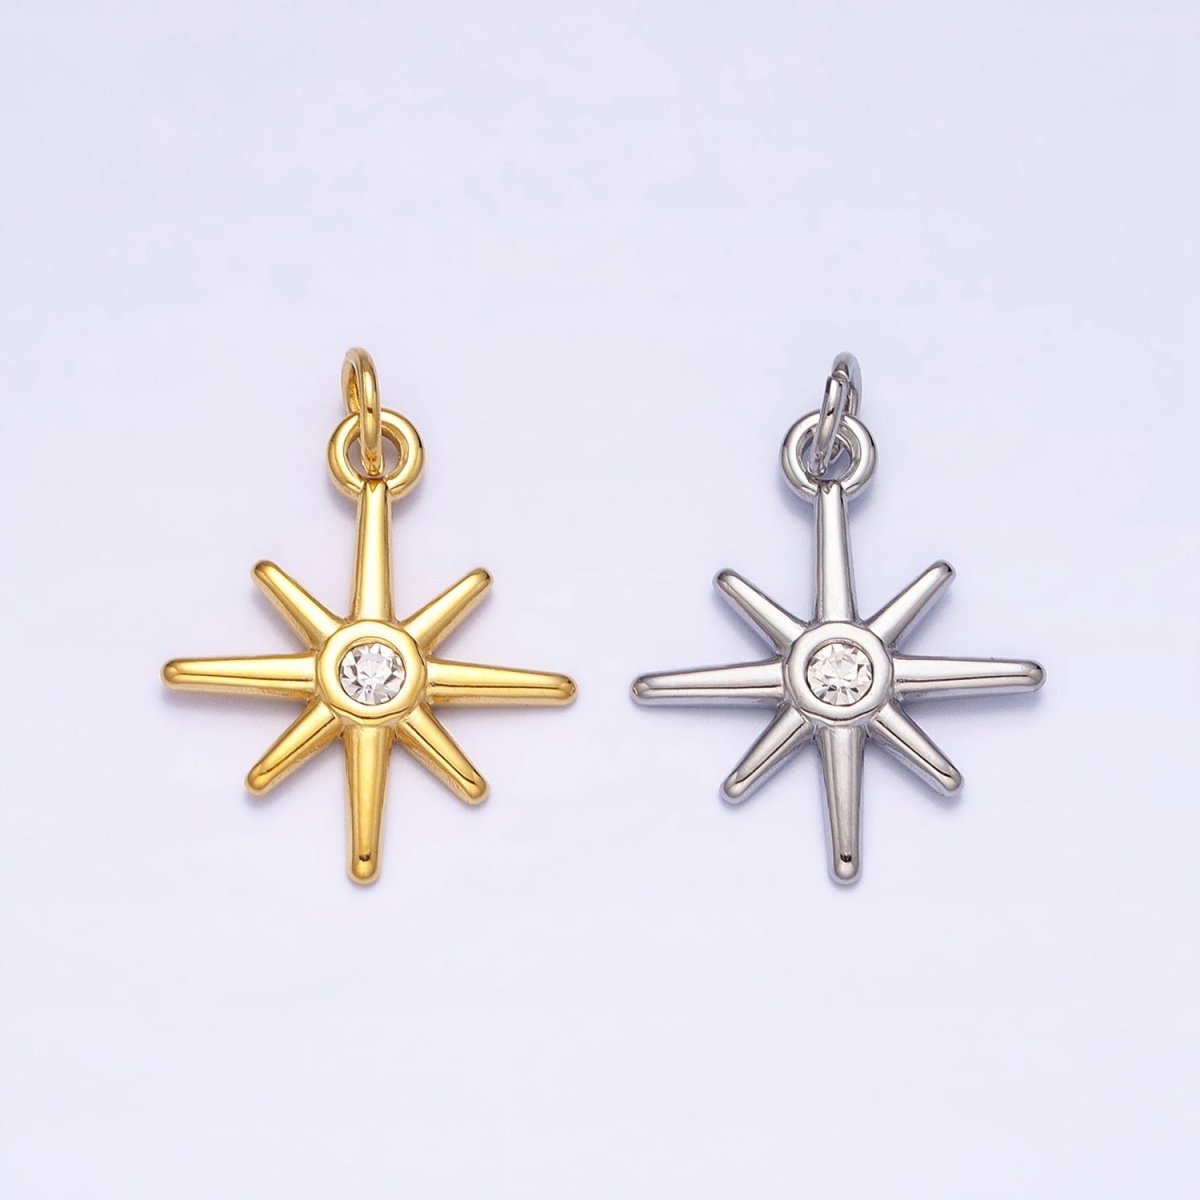 Mini Gold Star Charm North Star Pendant Celestial Jewelry AC-444 AC-445 - DLUXCA